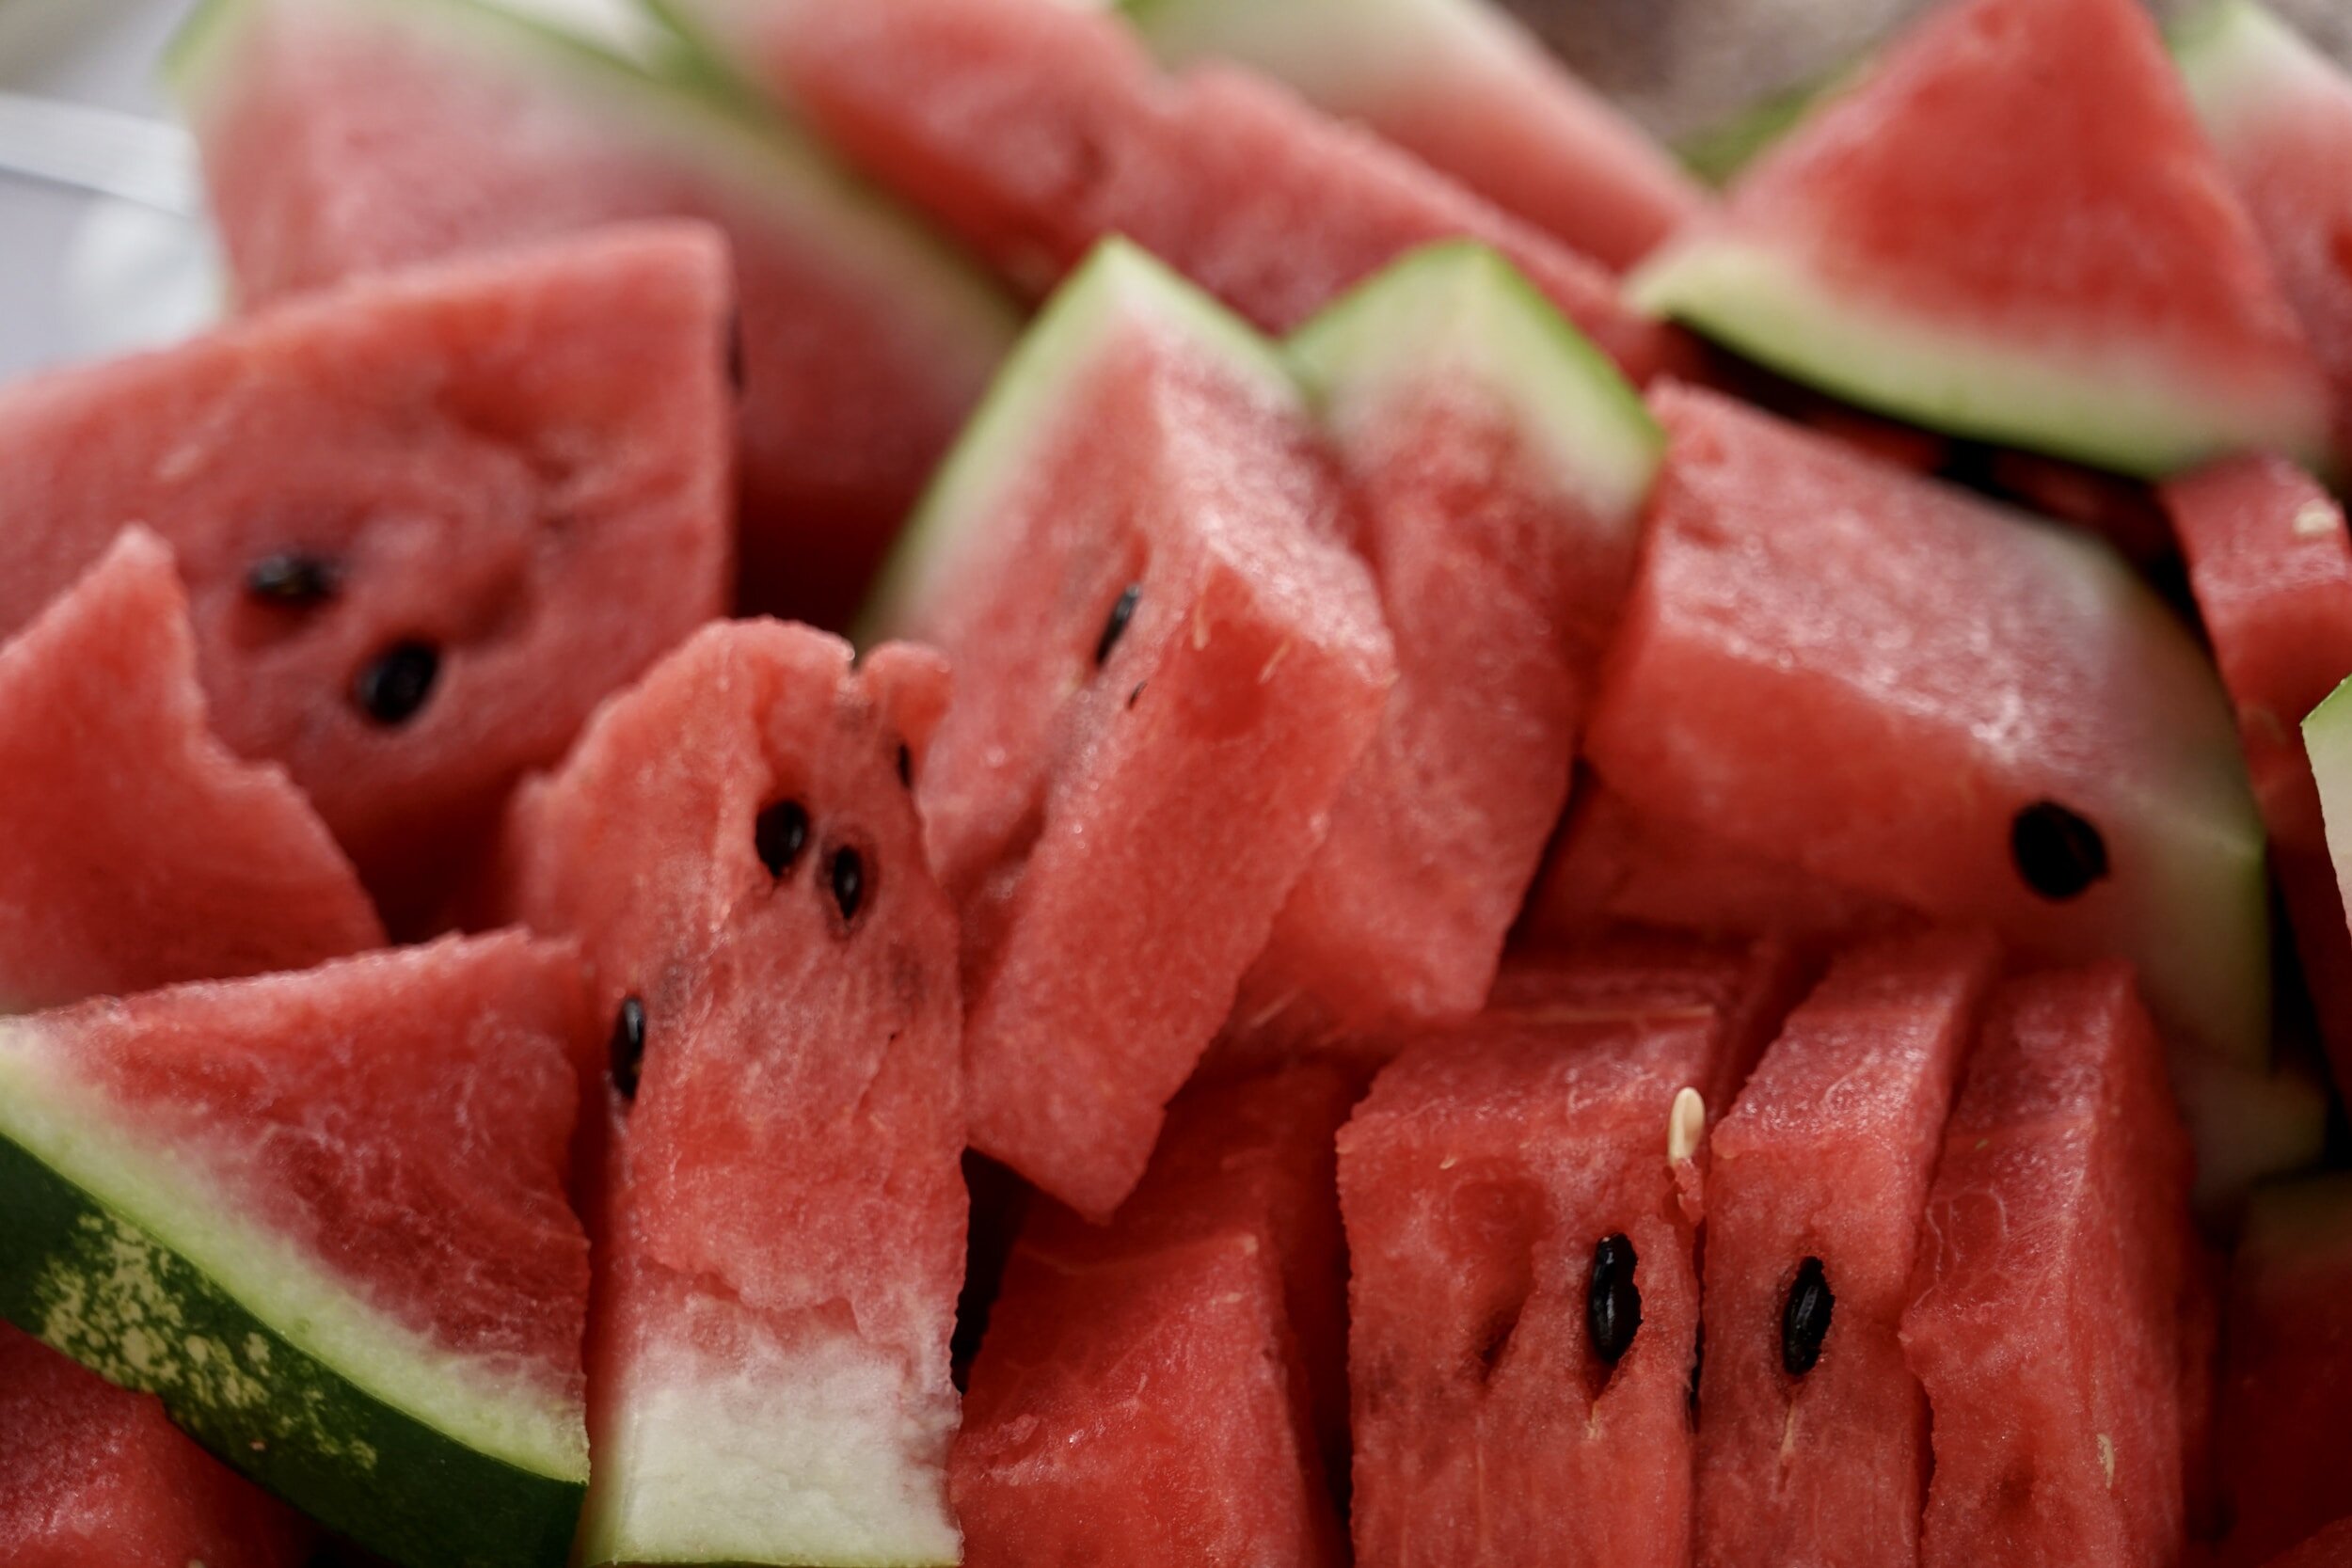 15. Watermelon